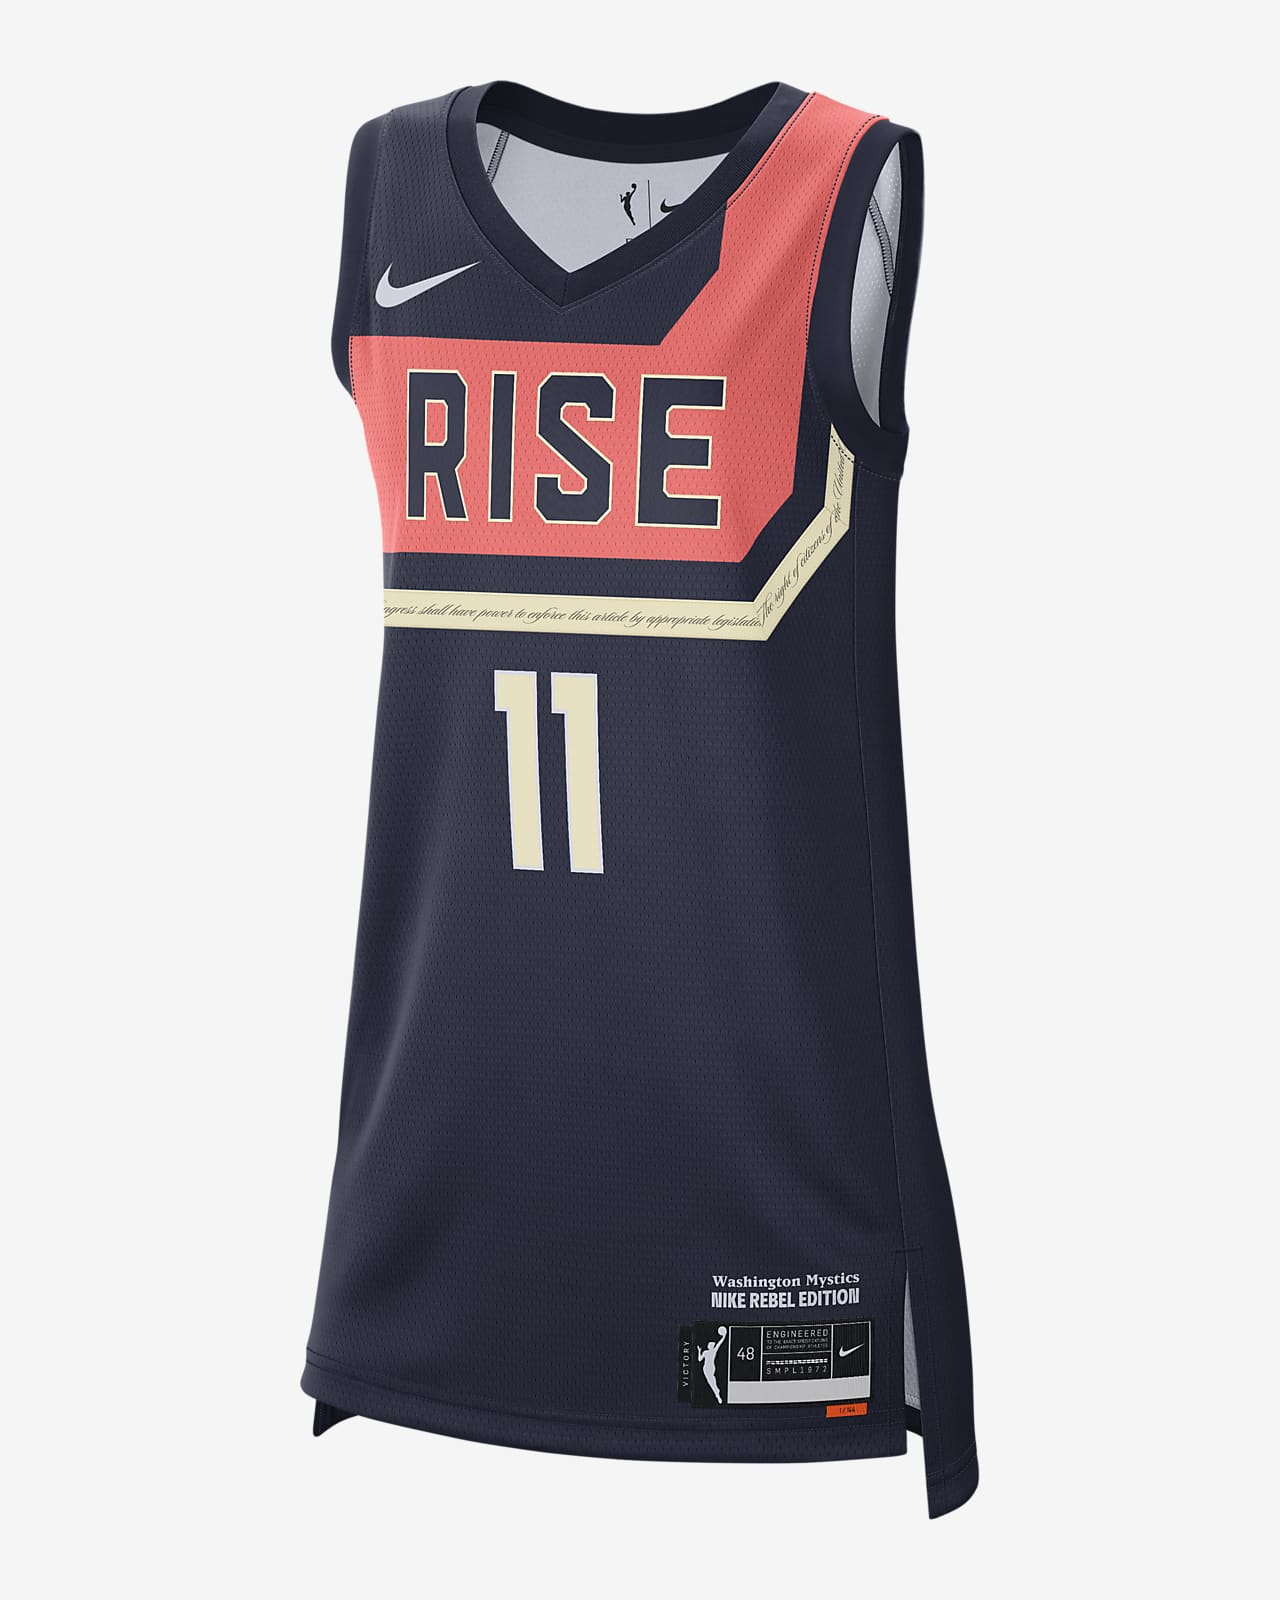 Washington Mystics WNBA Fan Jerseys for sale